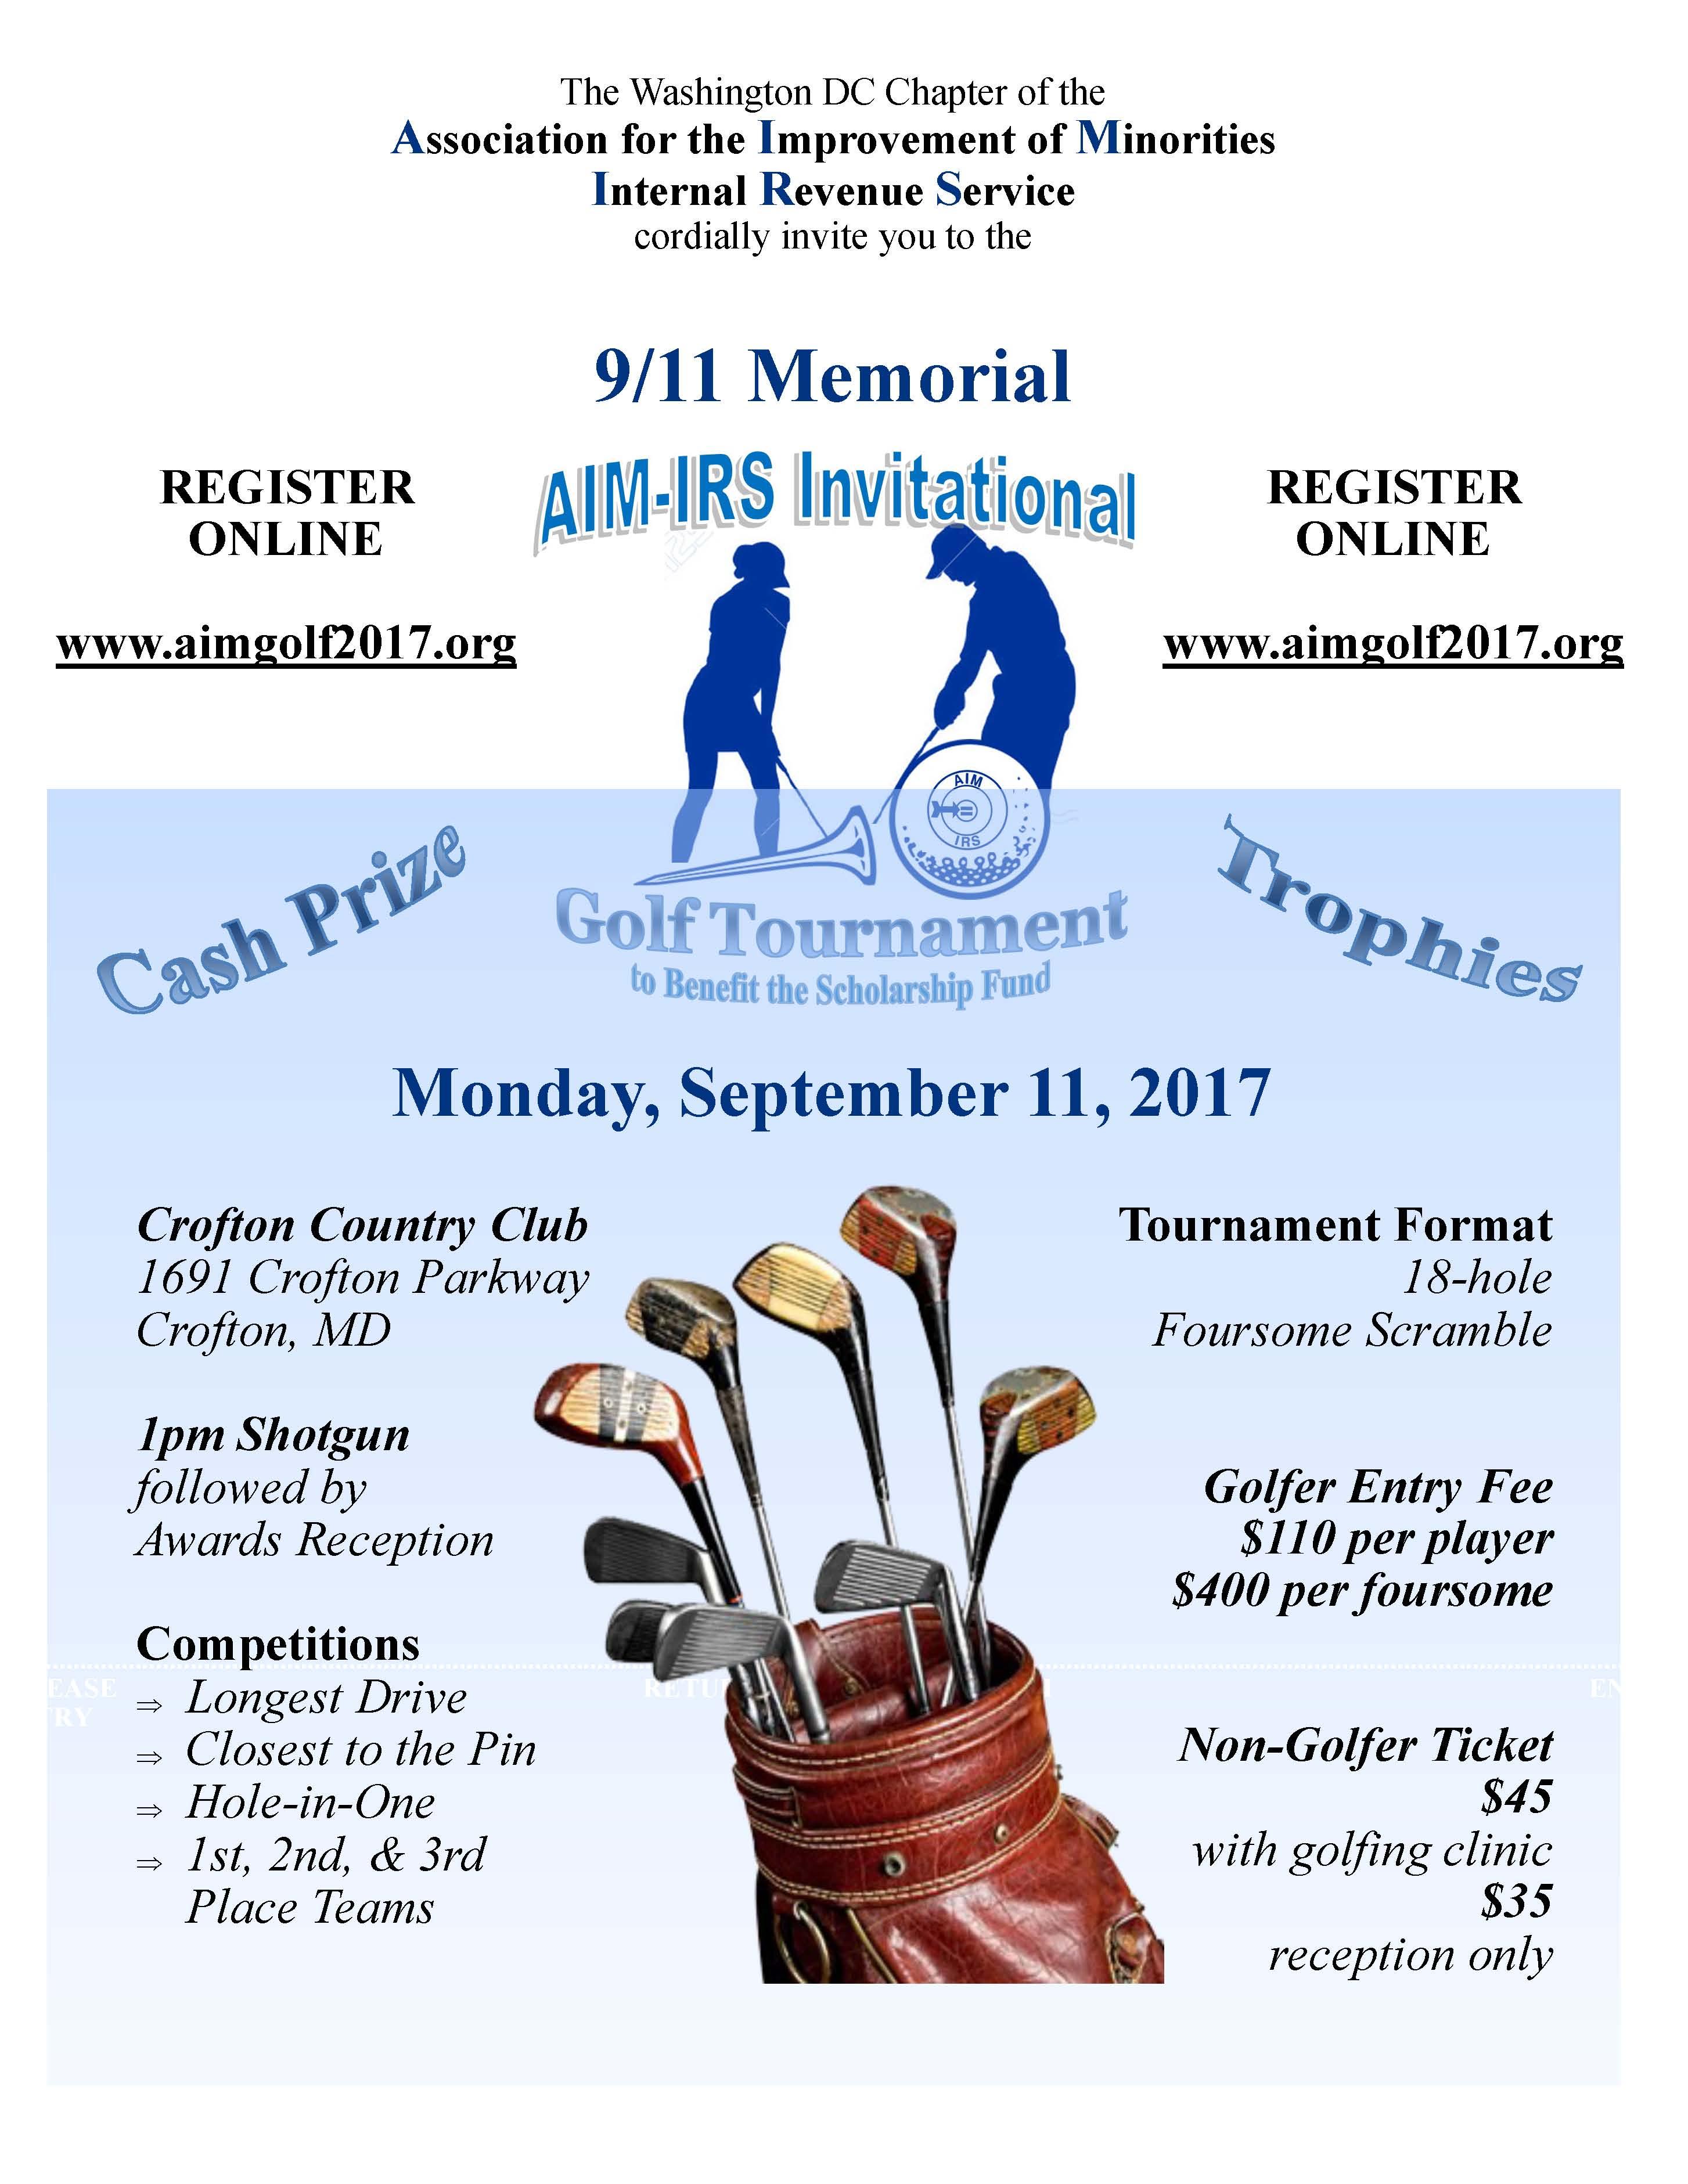 9/11 Memorial - AIM-IRS Invitational Golf Tournament